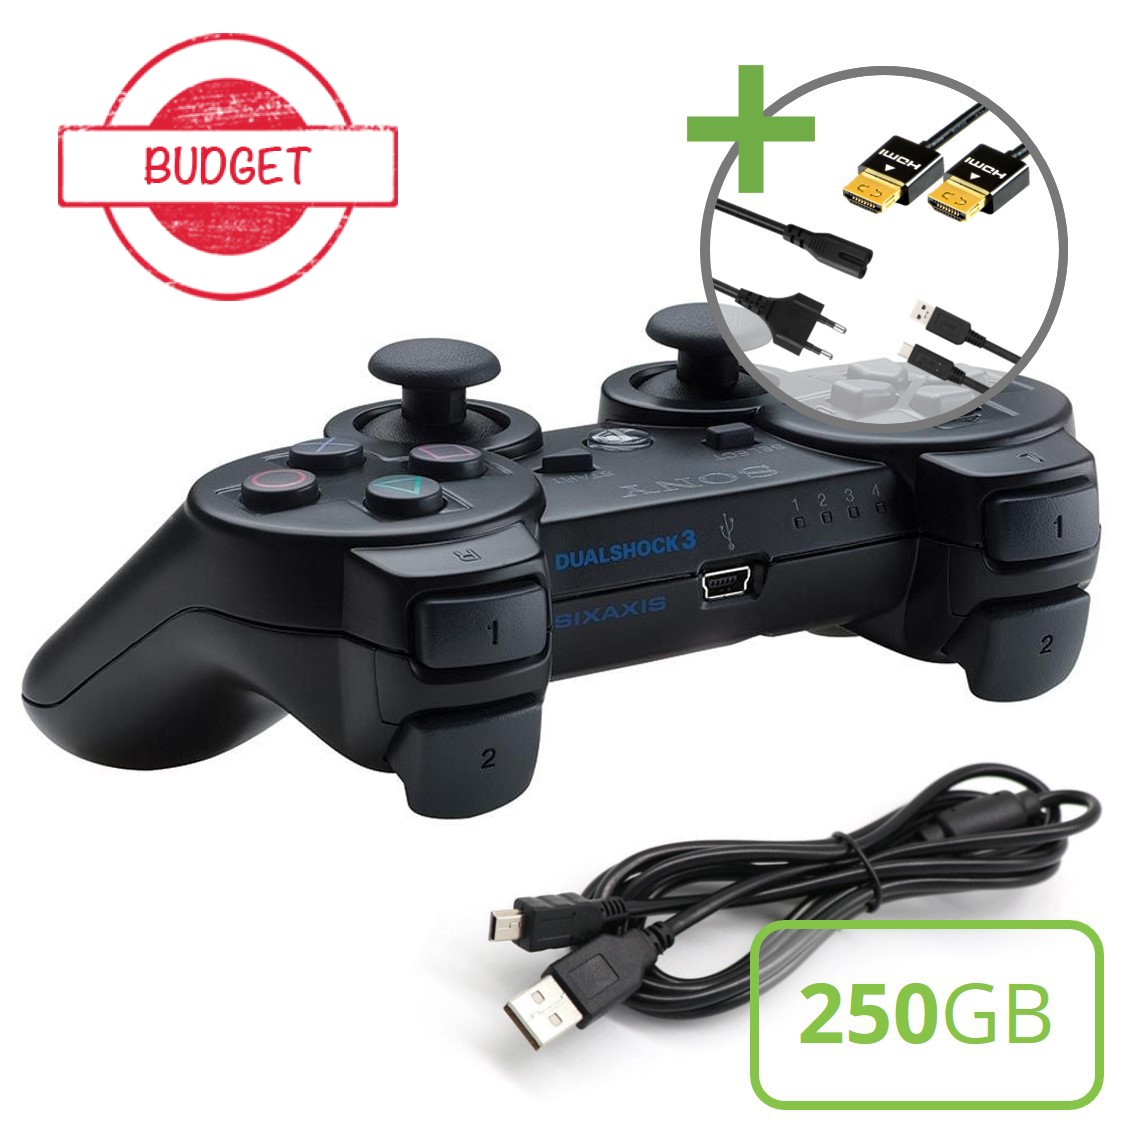 Sony PlayStation 3 Super Slim (250GB) Starter Pack - DualShock Edition - Budget - Playstation 3 Hardware - 4